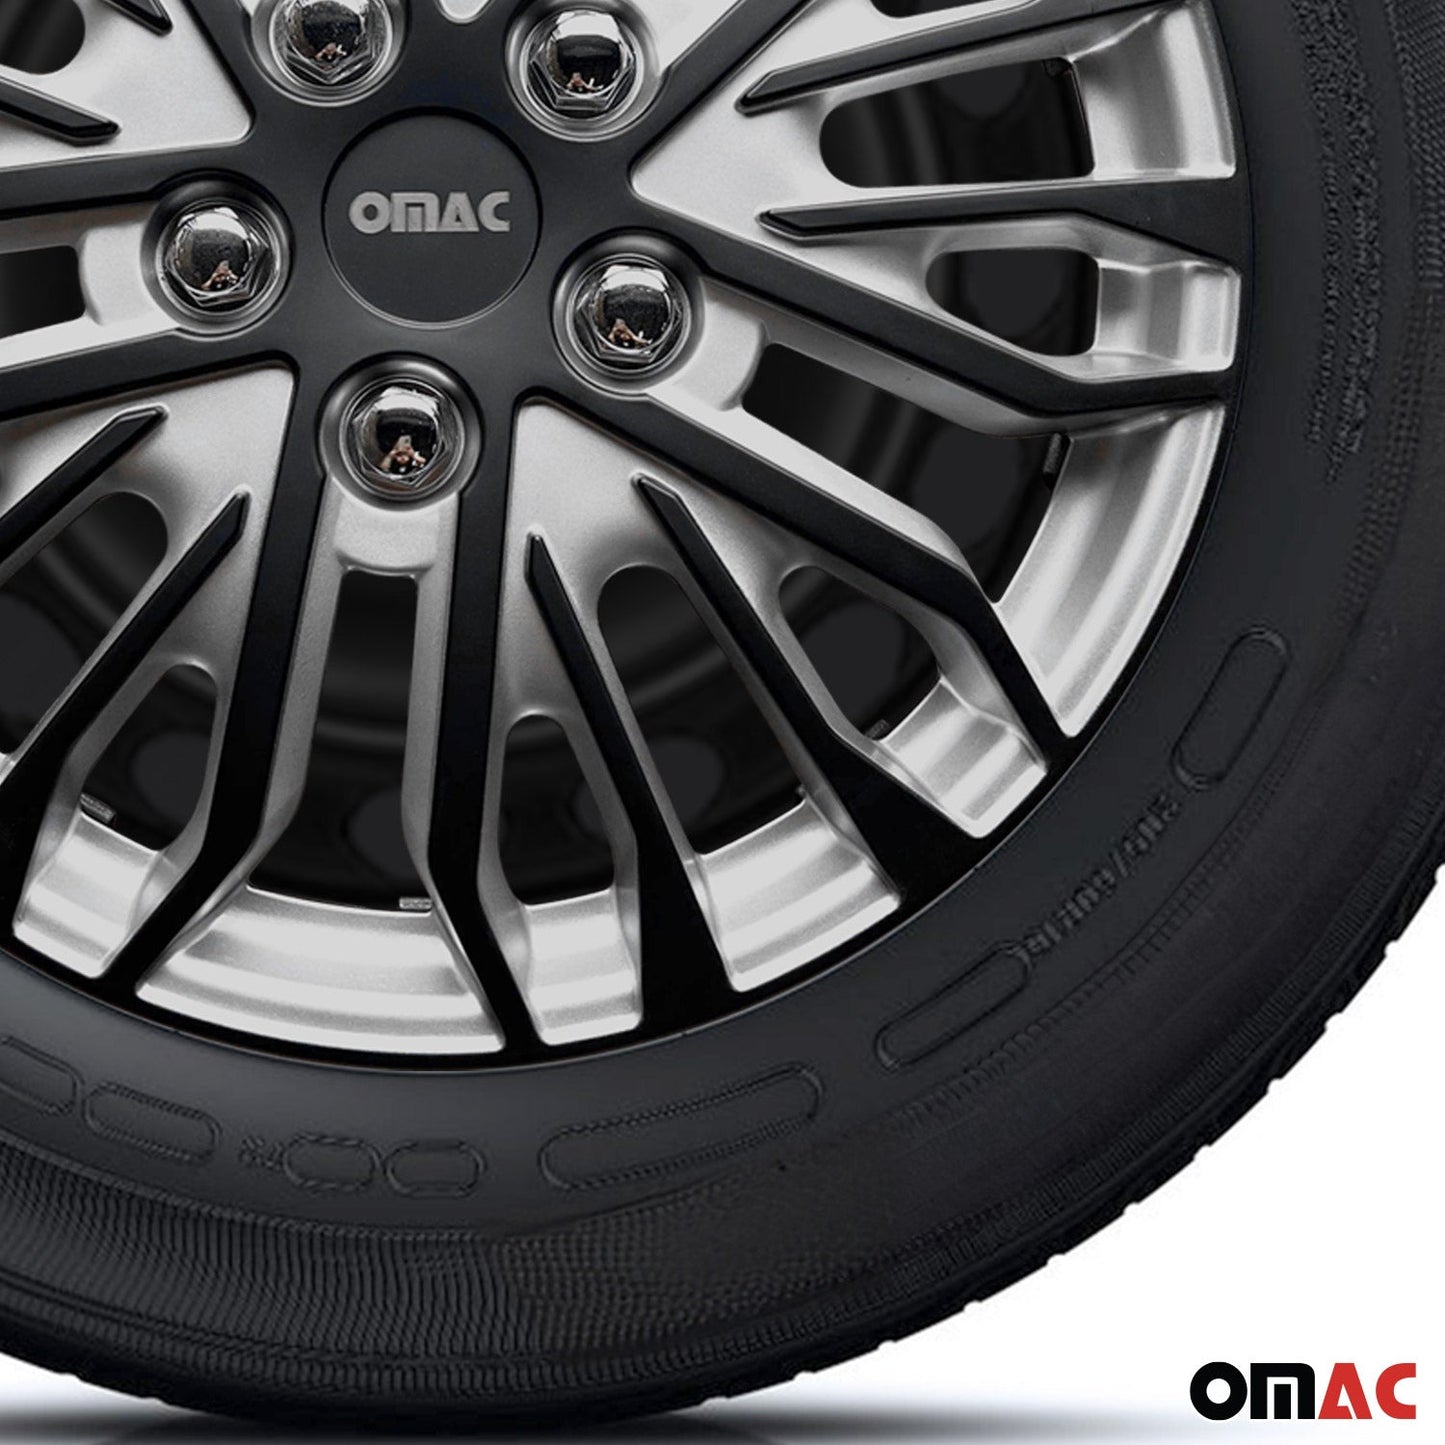 OMAC 16" Wheel Covers Guard Hub Caps Durable Snap On ABS Silver Matt Black 4x OMAC-WE41-SVMBK16